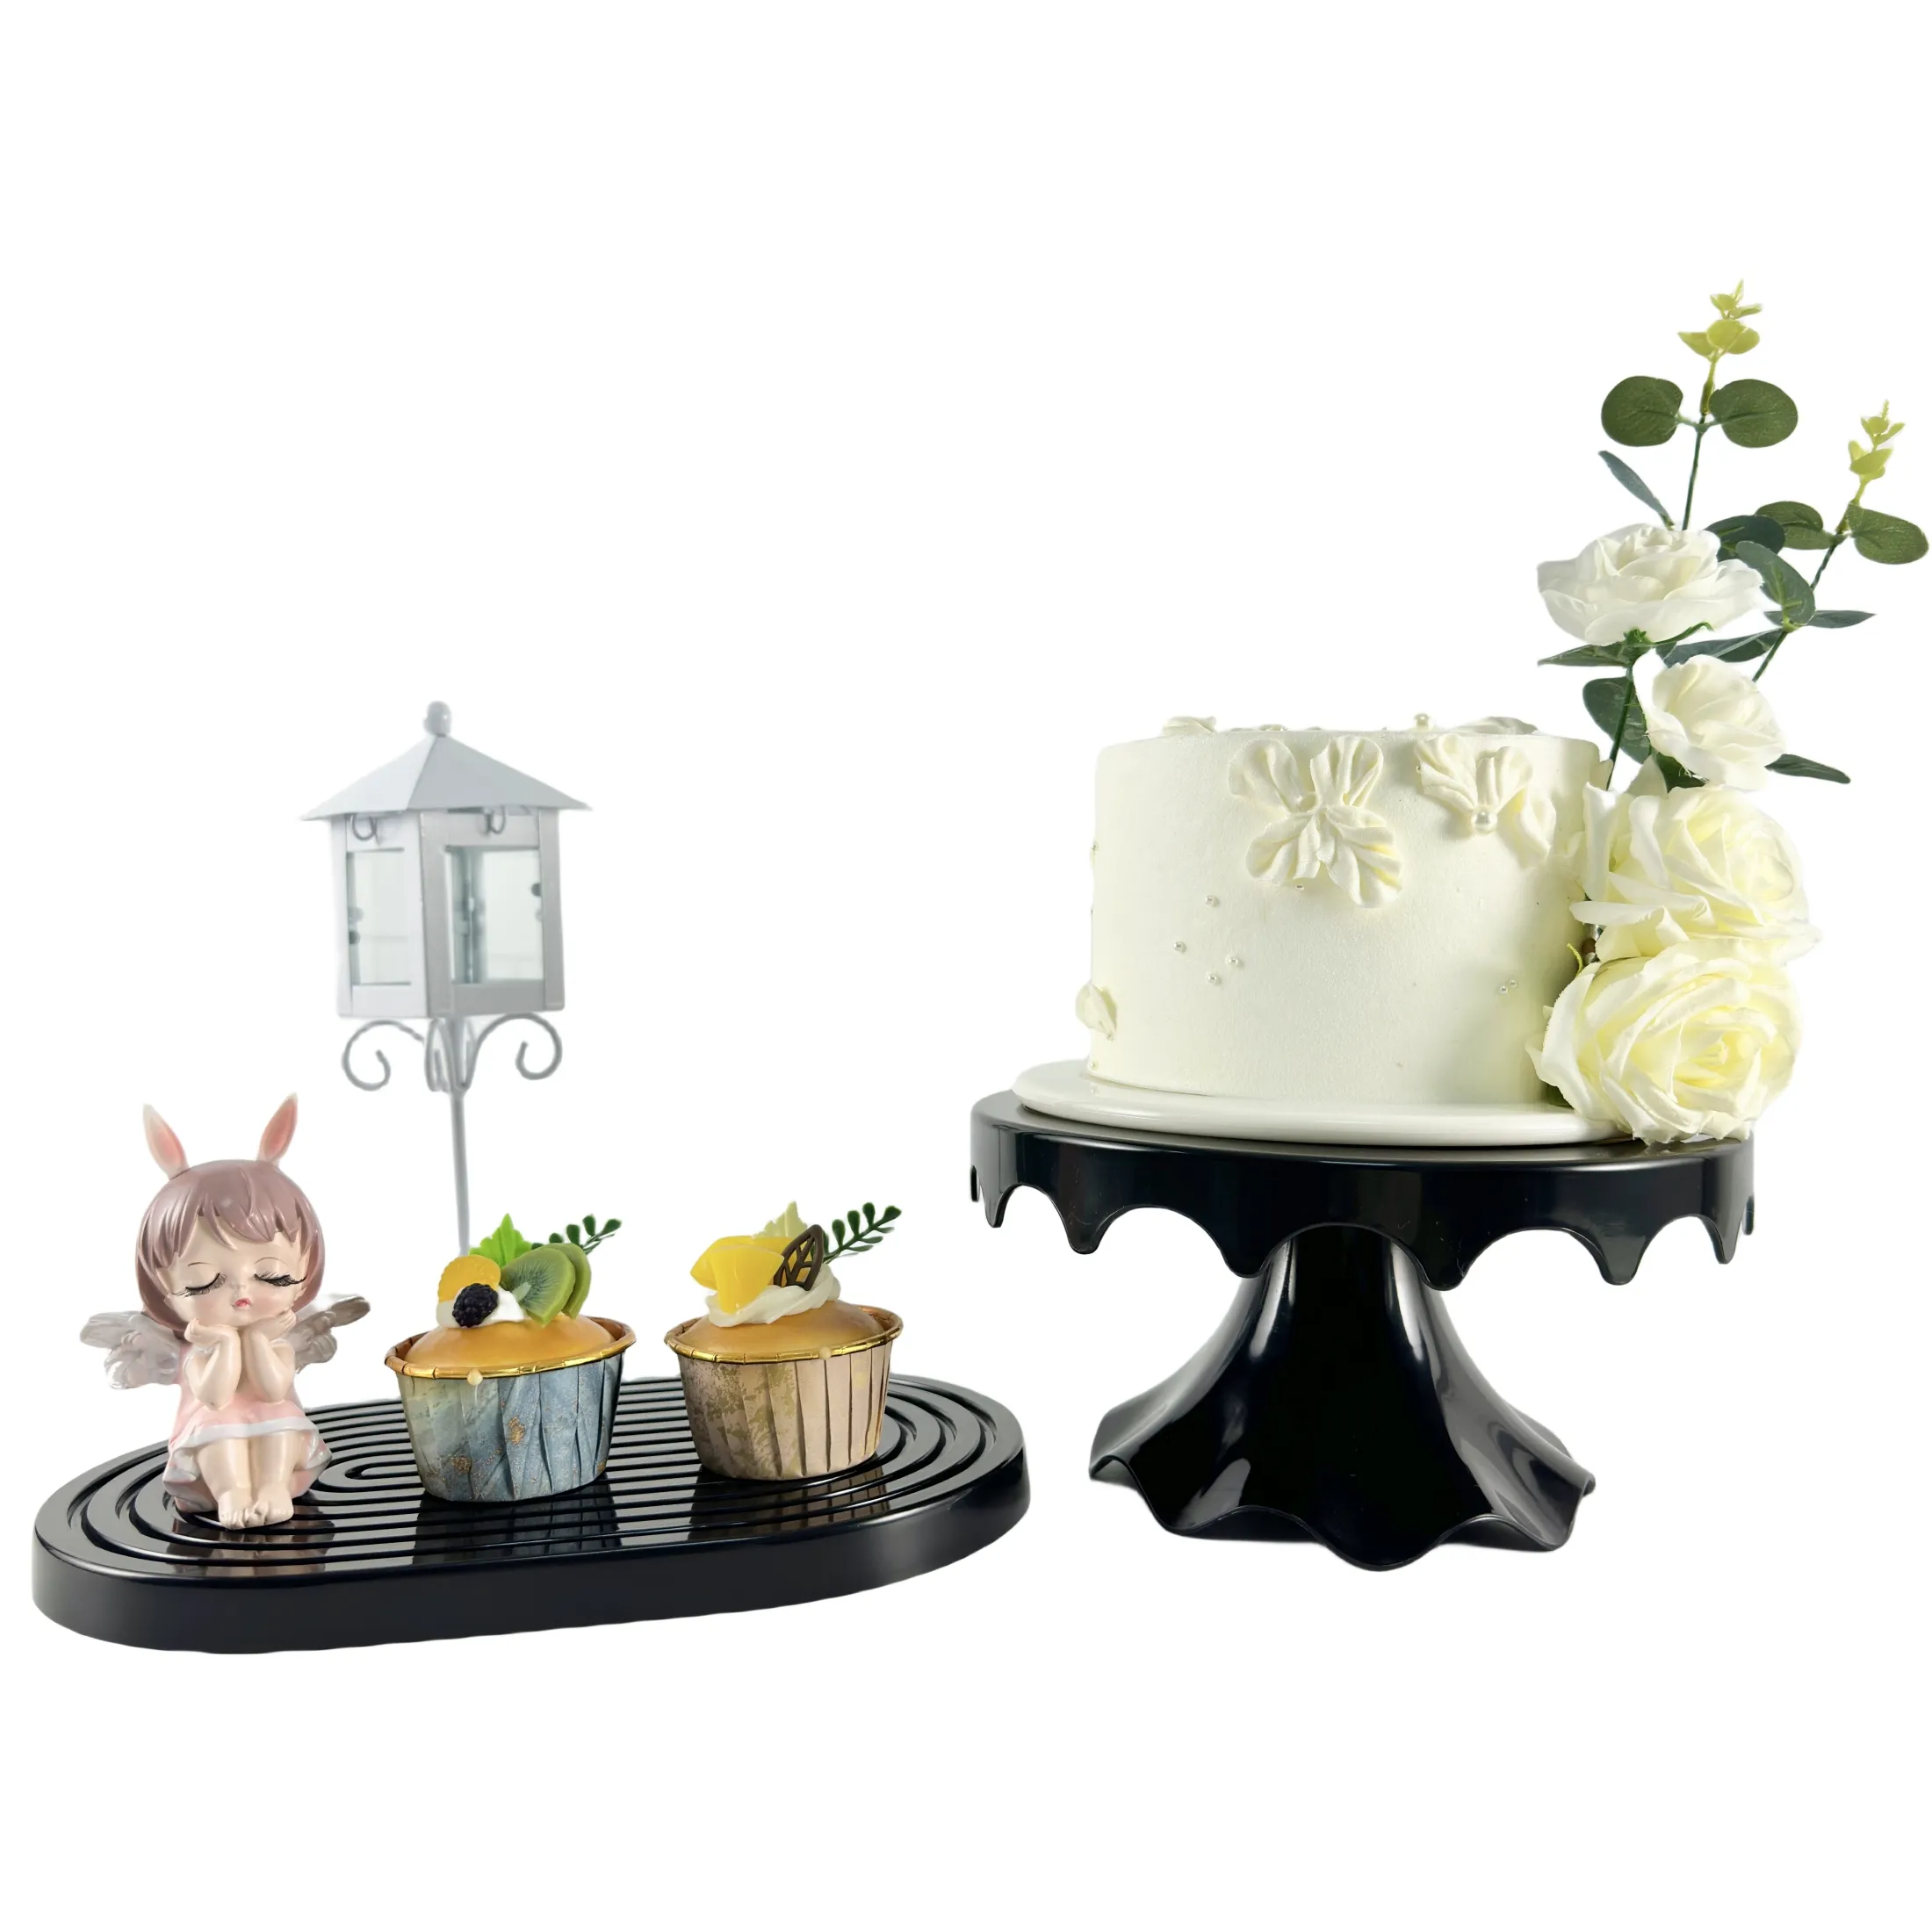 Hiasan tengah meja pernikahan, penyangga kue